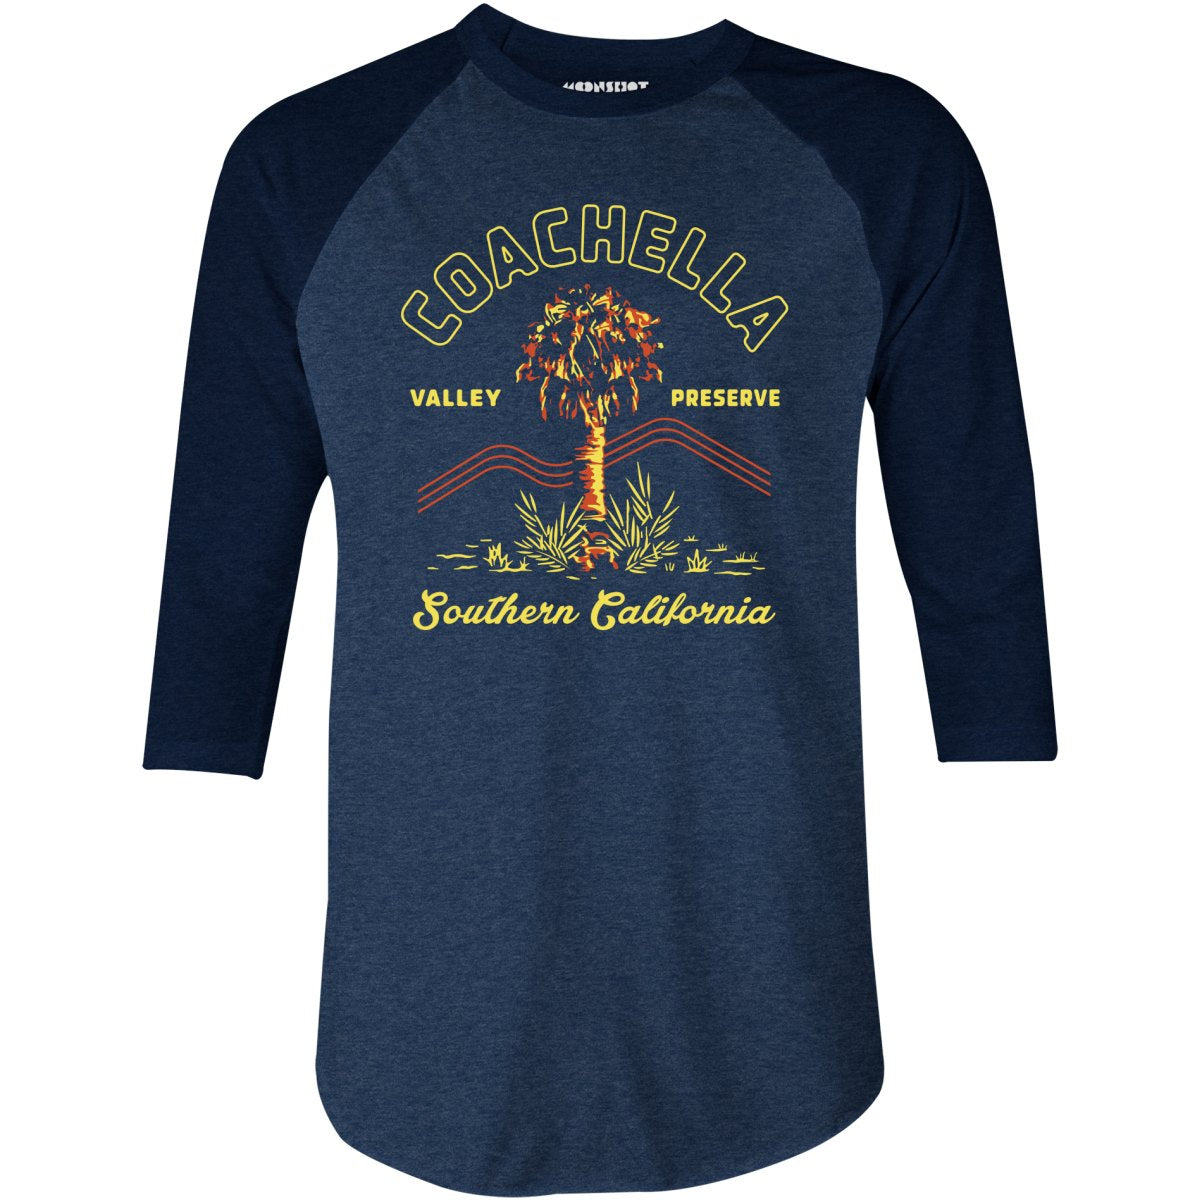 Coachella Valley Preserve - Southern California - 3/4 Sleeve Raglan T-Shirt